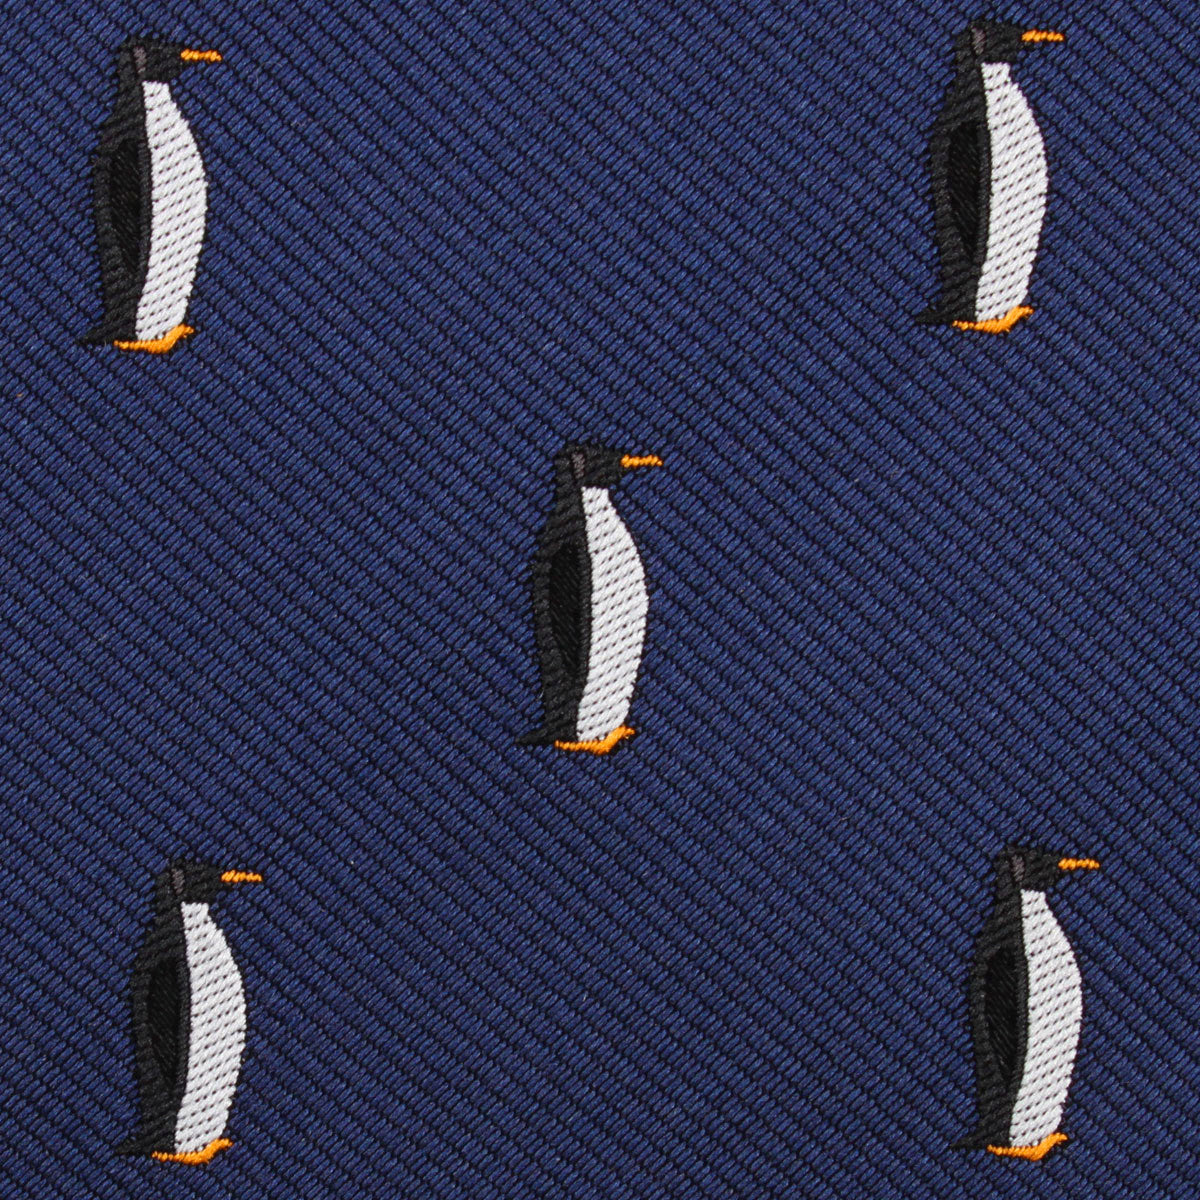 King Penguin Fabric Skinny Tie